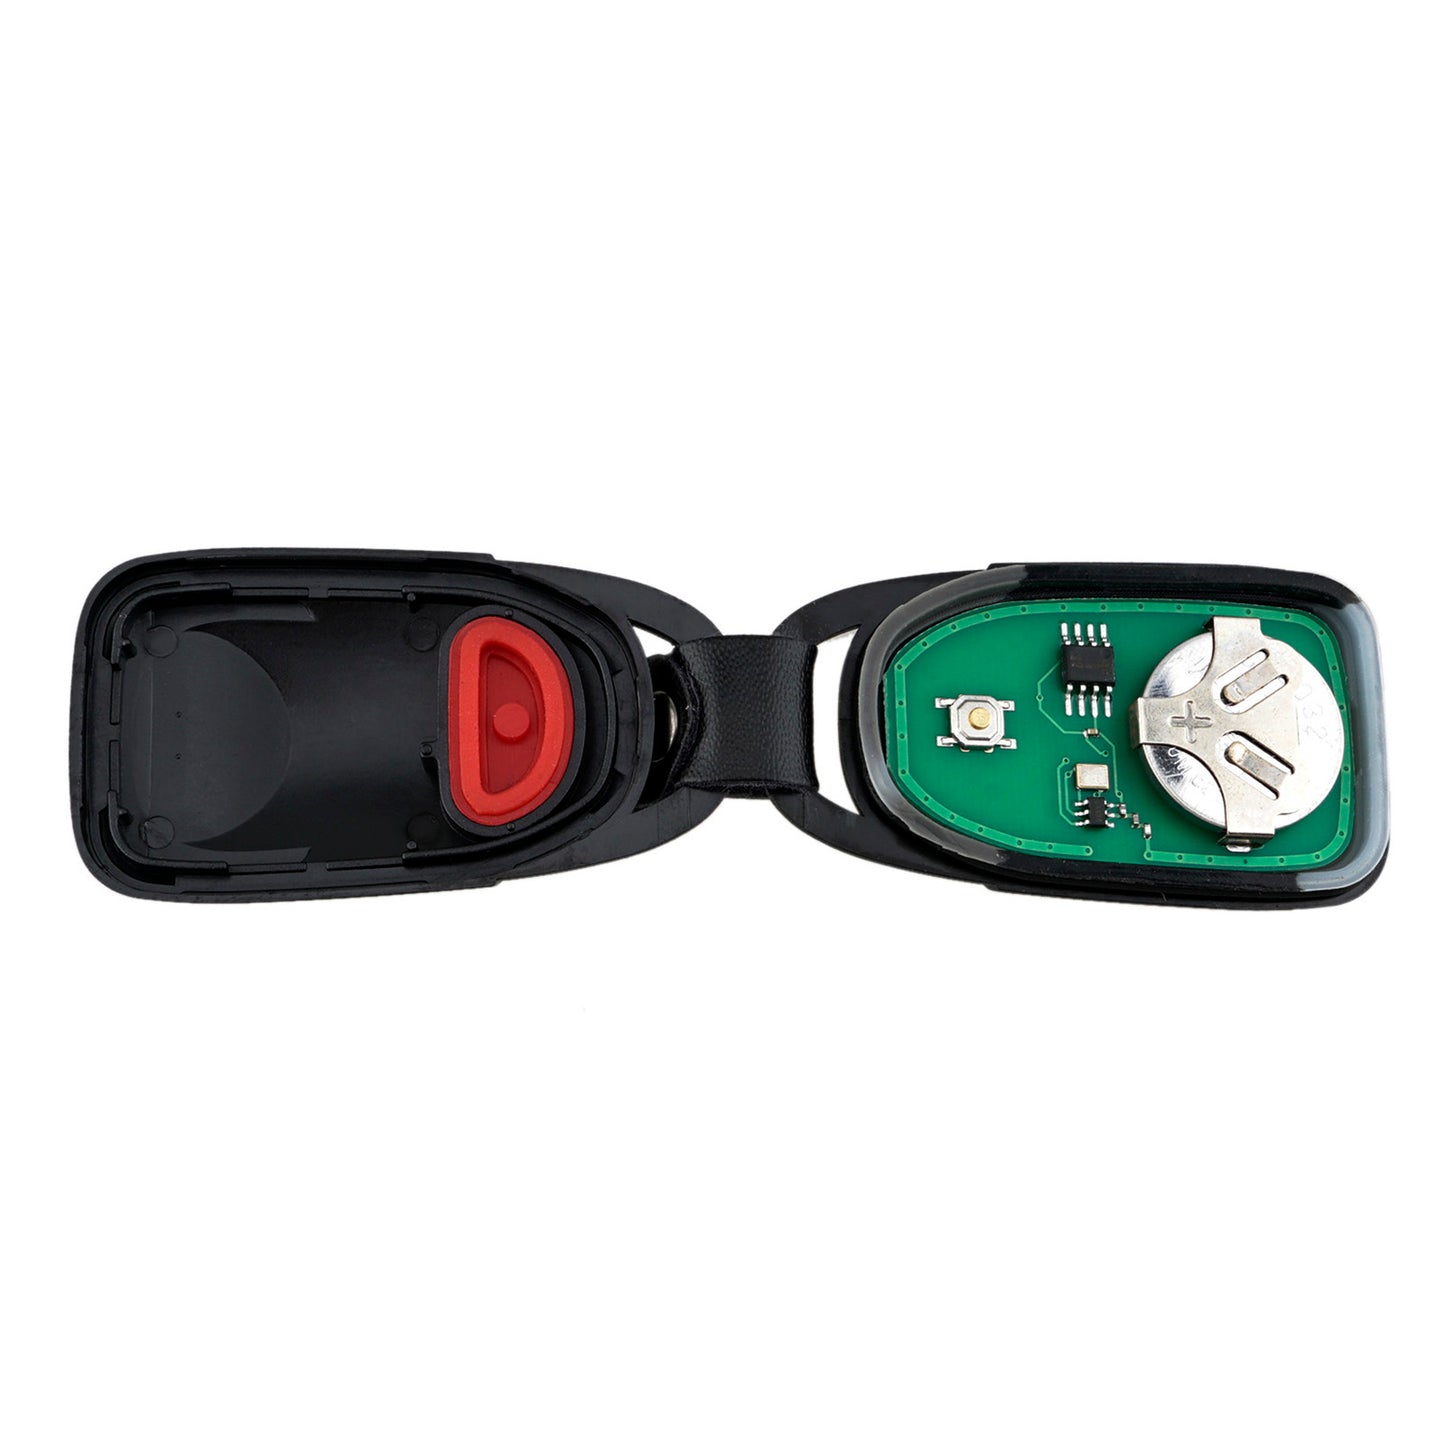 4 Buttons 315MHz Keyless Entry Fob Remote Car Key For 2011 - 2015 Hyundai Sonata FCC ID: OSLOKA-950T SKU : J931